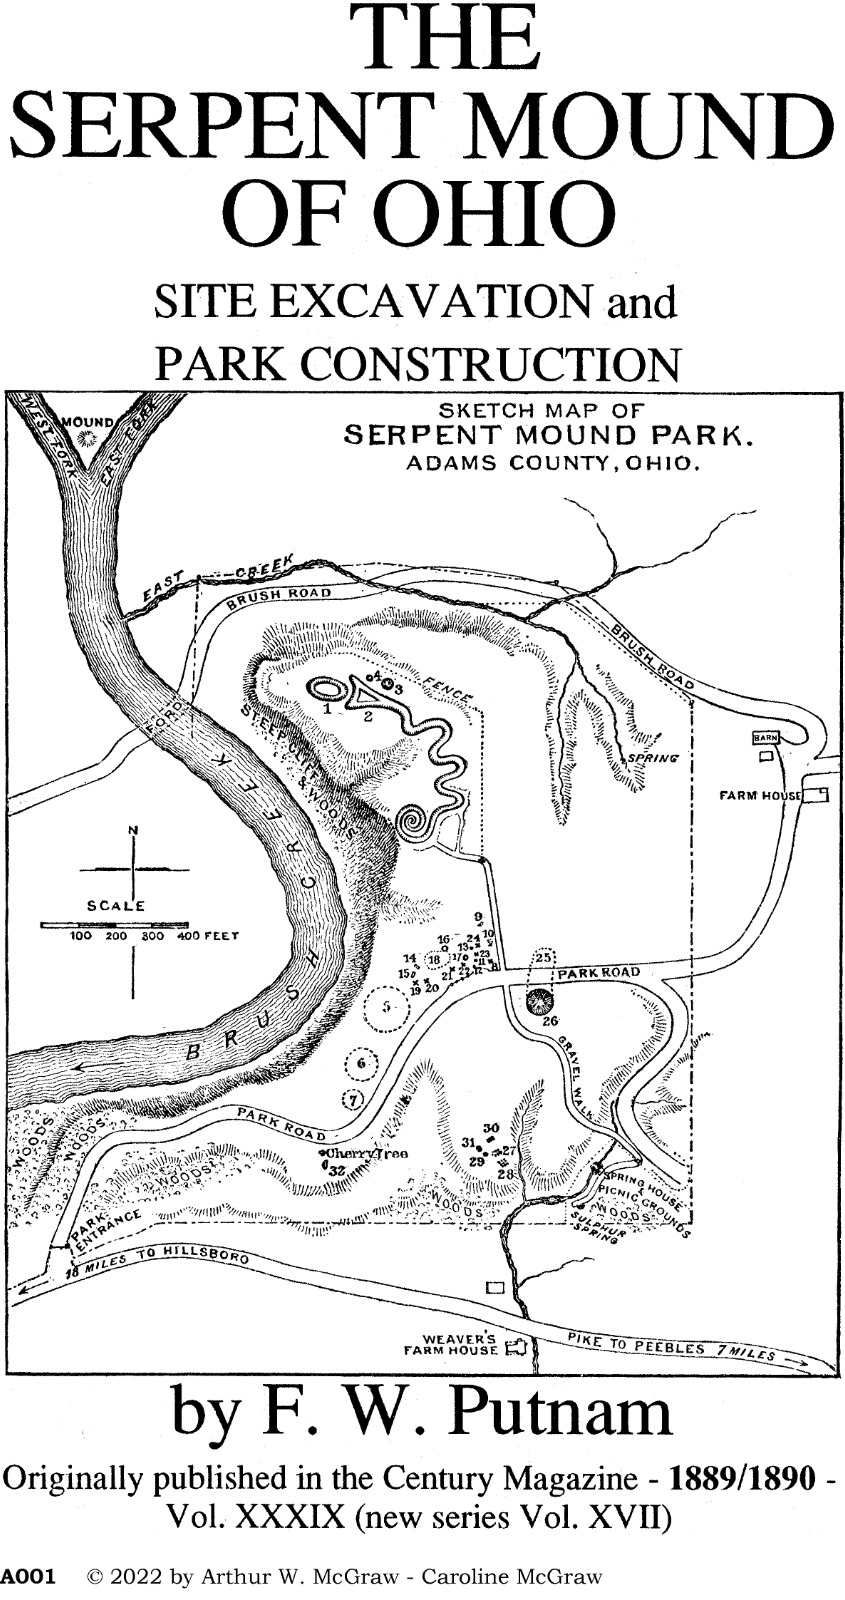 The Serpent Mound of Ohio - 1889/1890 - F. W. Putnam - pdf